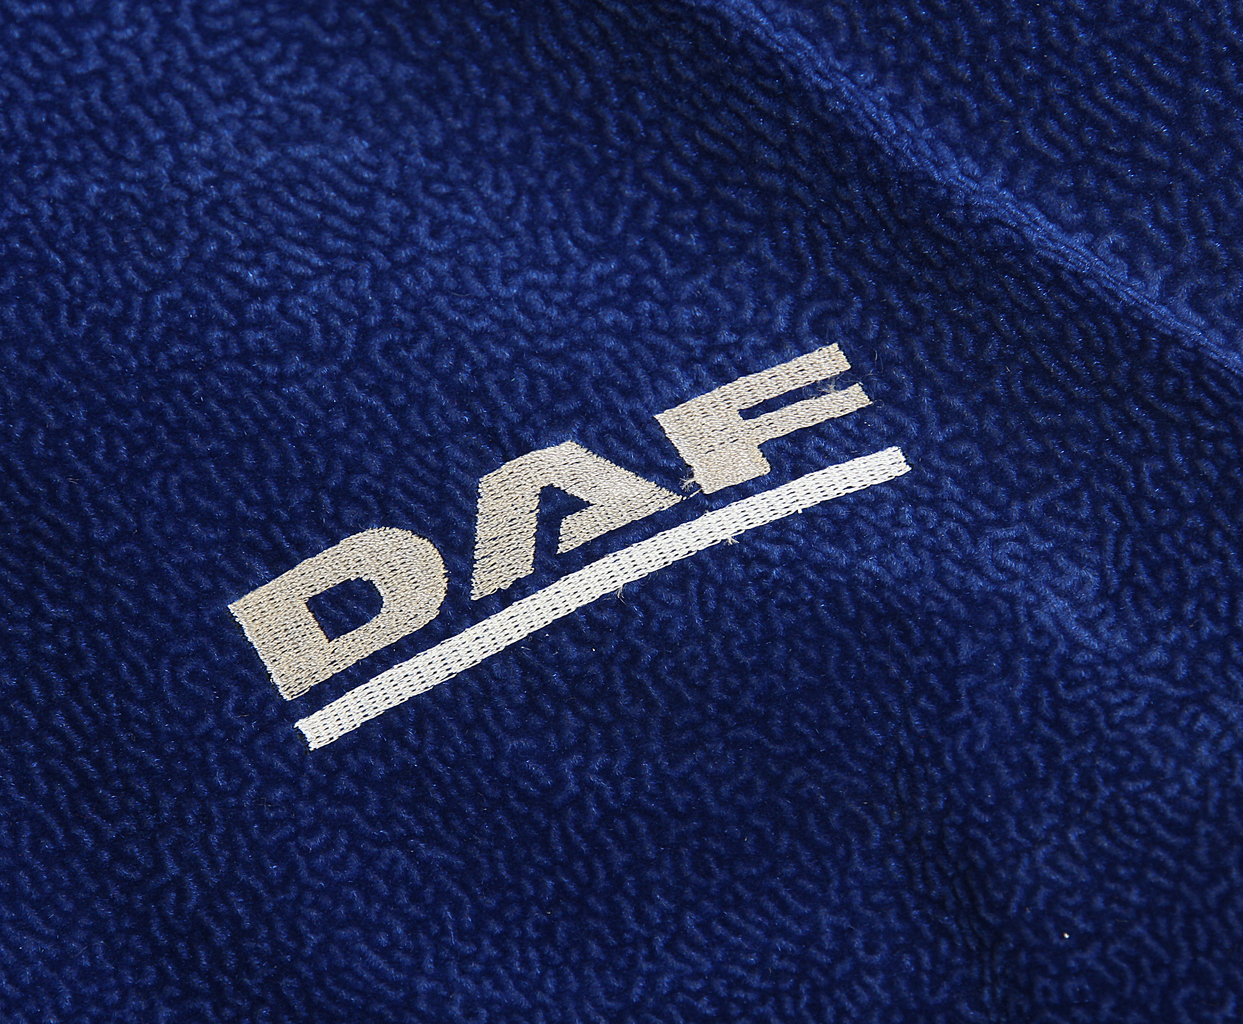 Шторка автомобильная для лобового стекла 240х80см синяя комплект спальника DAF XF105, DAF XF 105, АВТОРЕАЛ